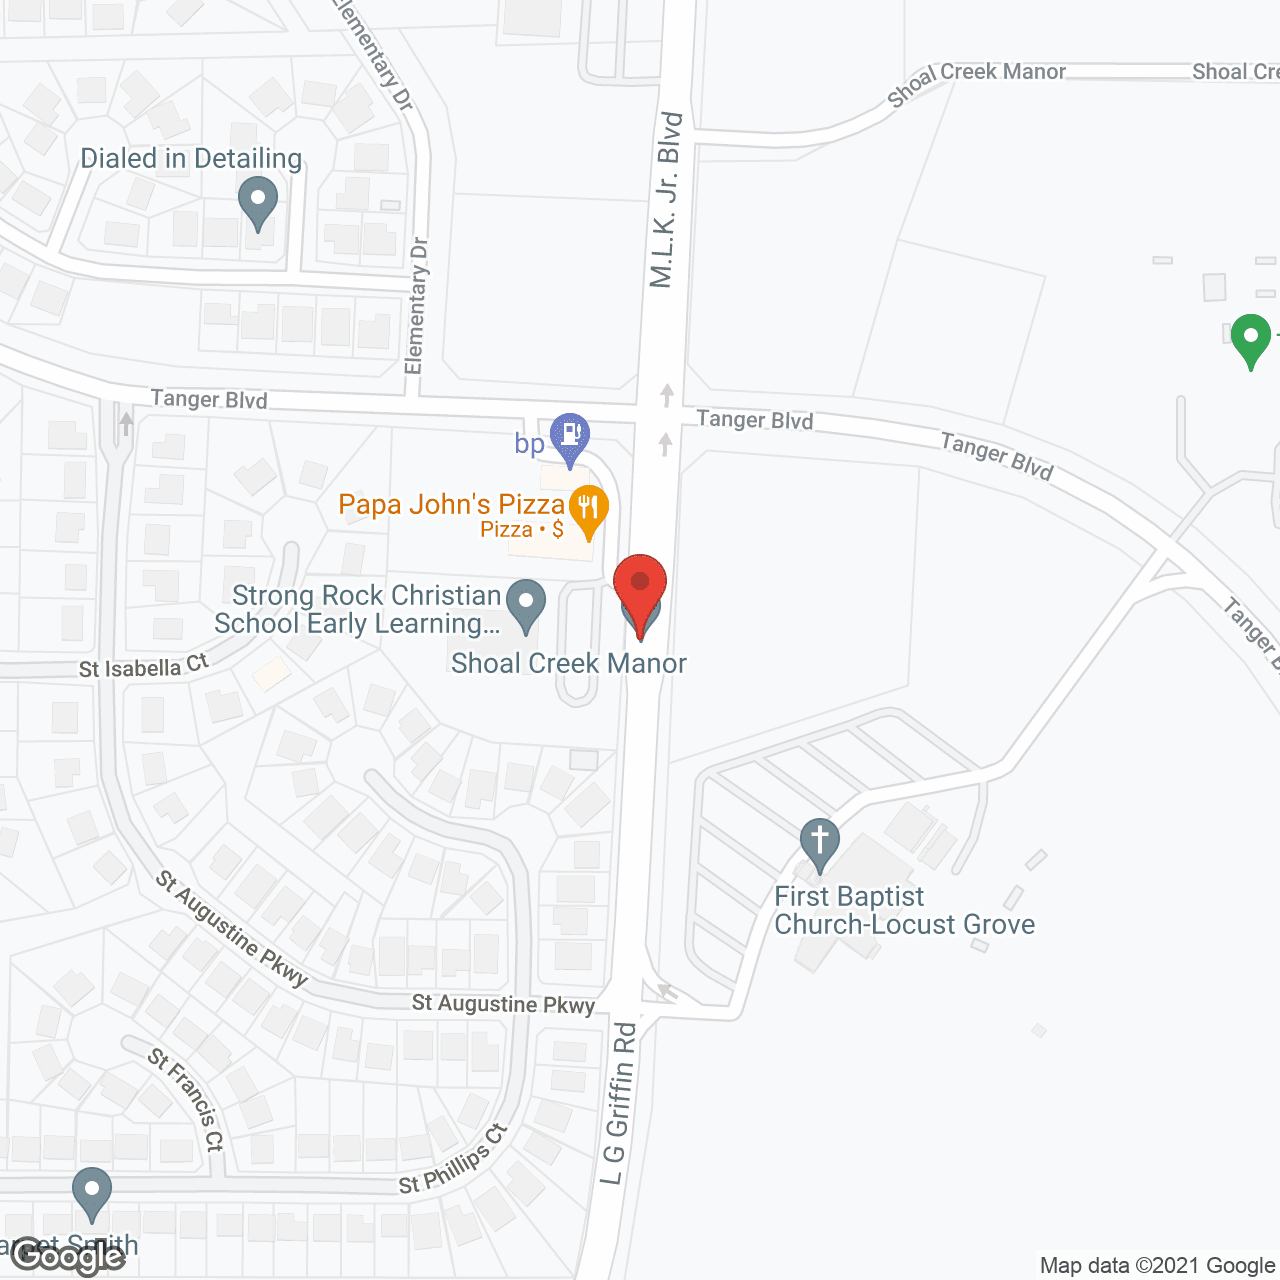 Shoal Creek Manor in google map